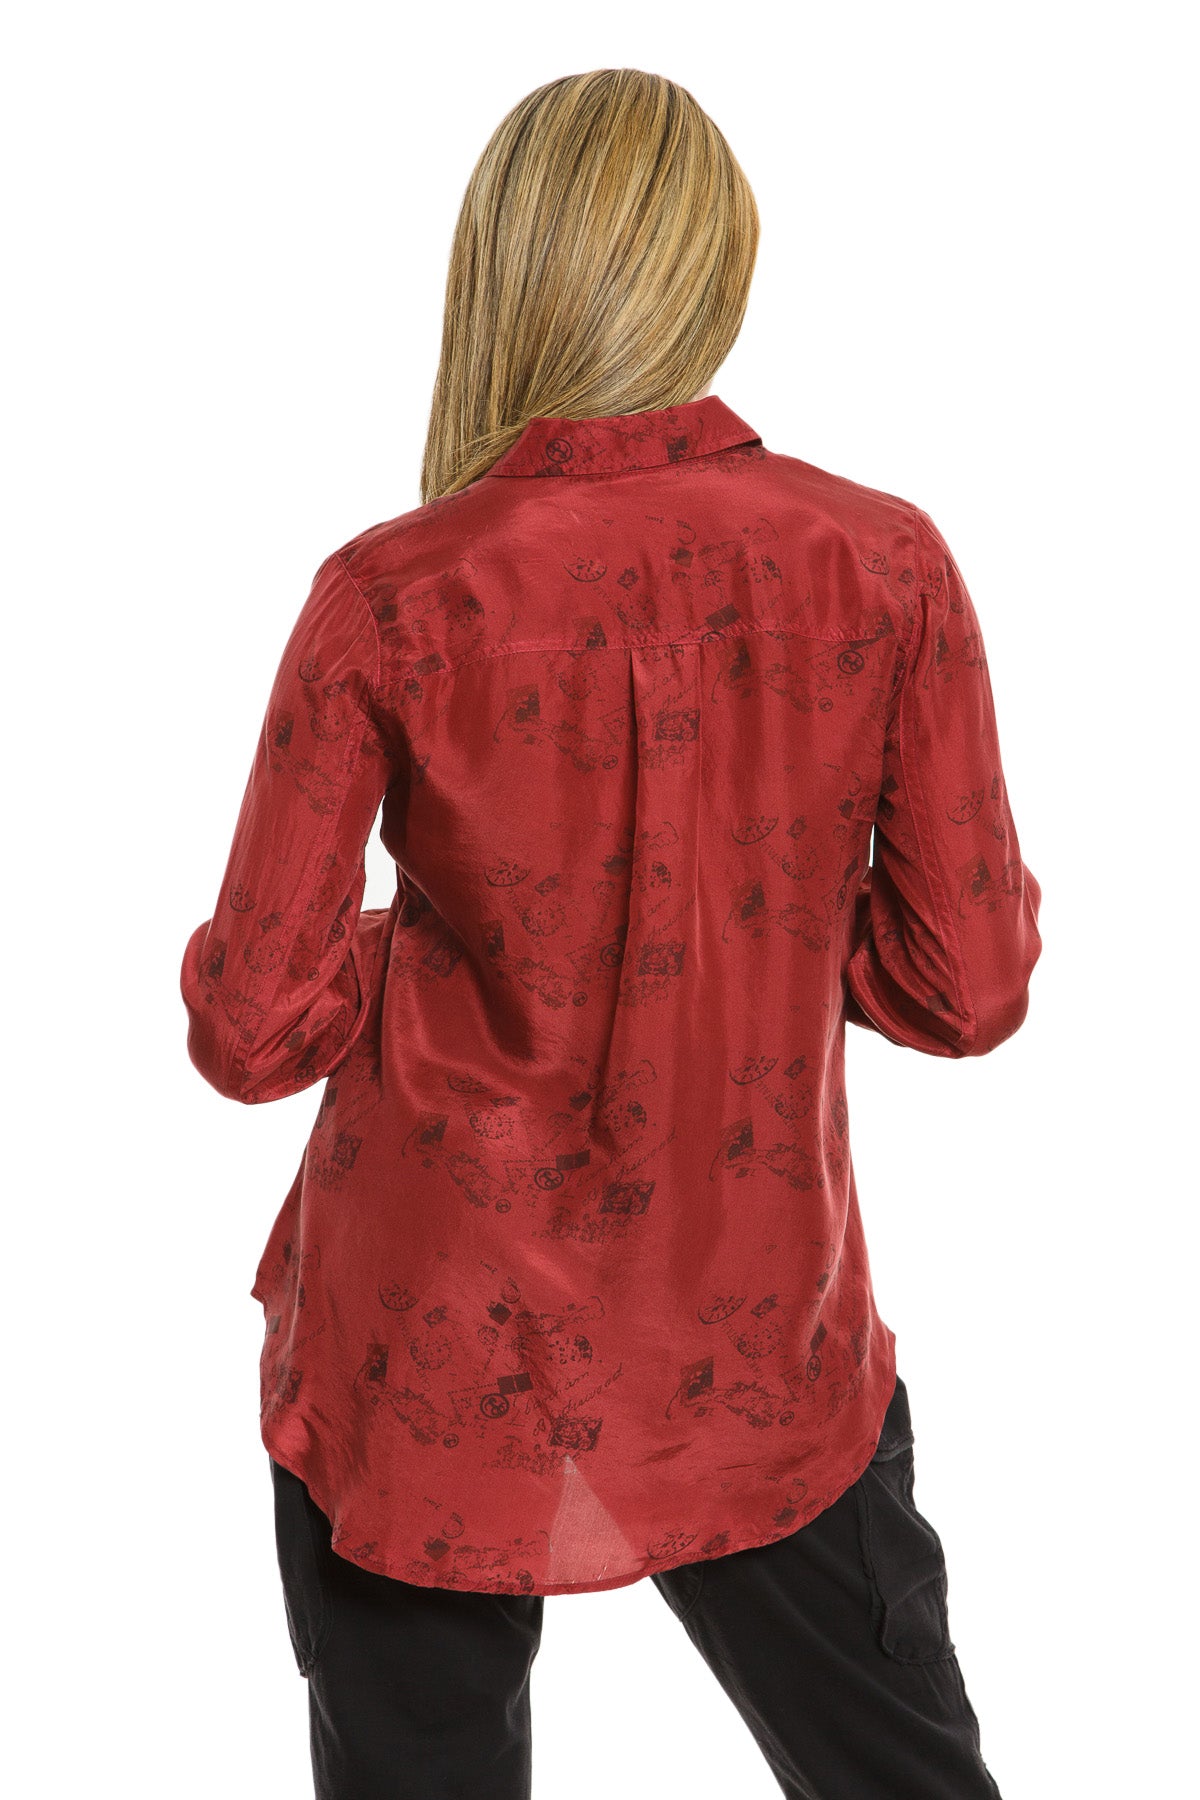 100% Silk long sleeve blouse in Brick